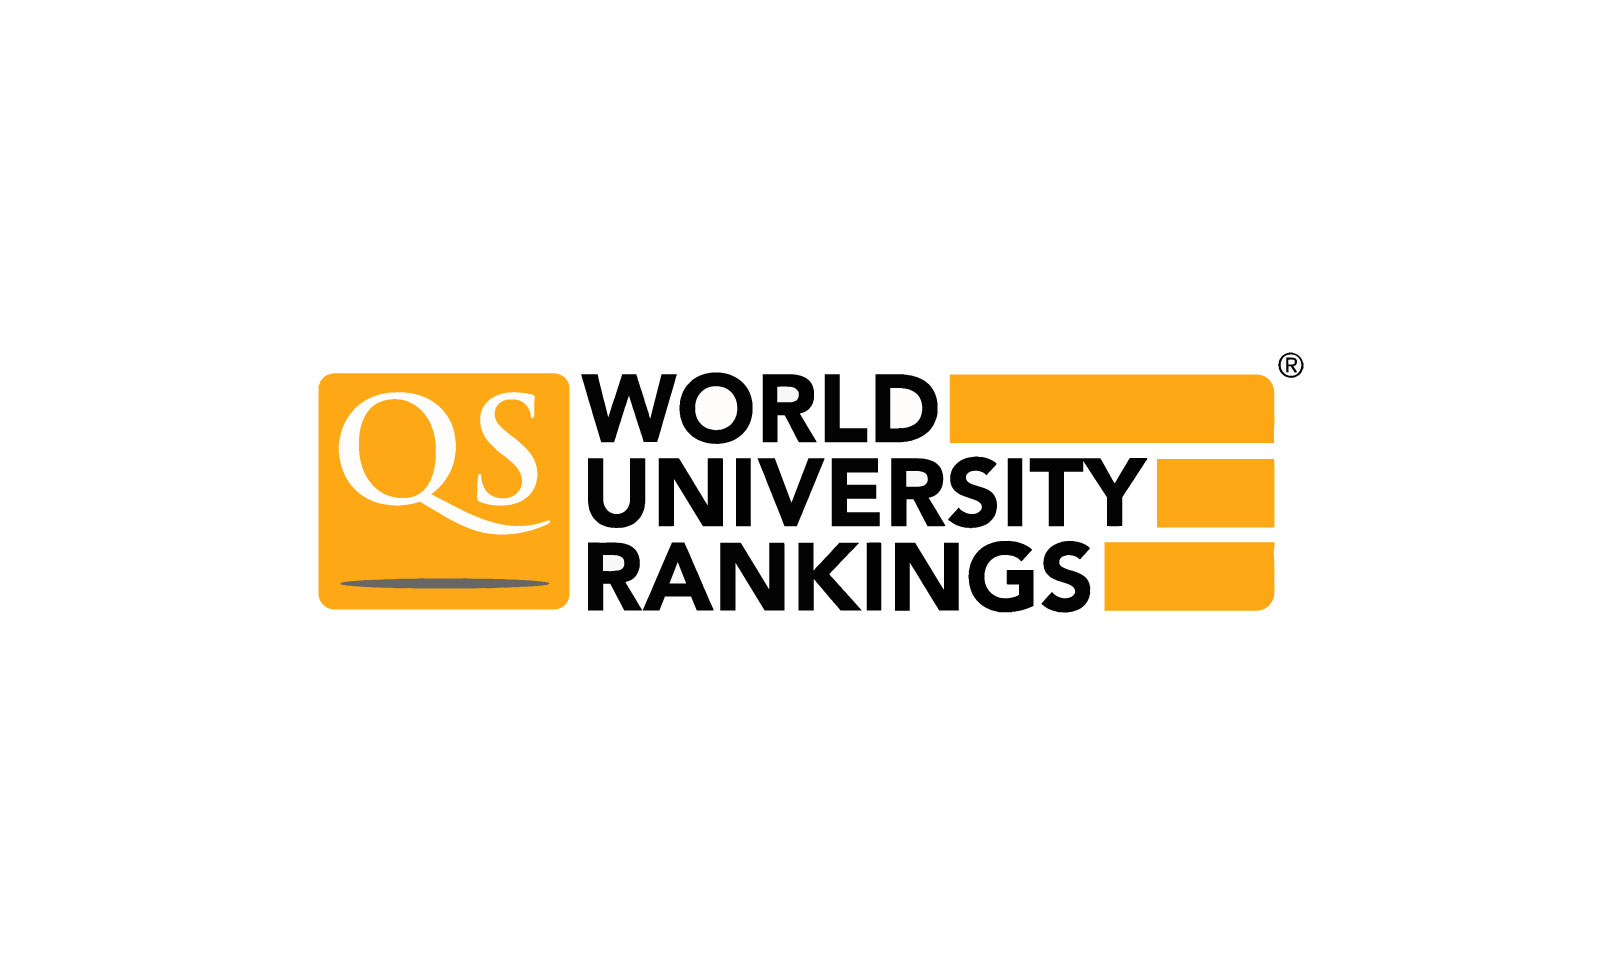 Qs ranking